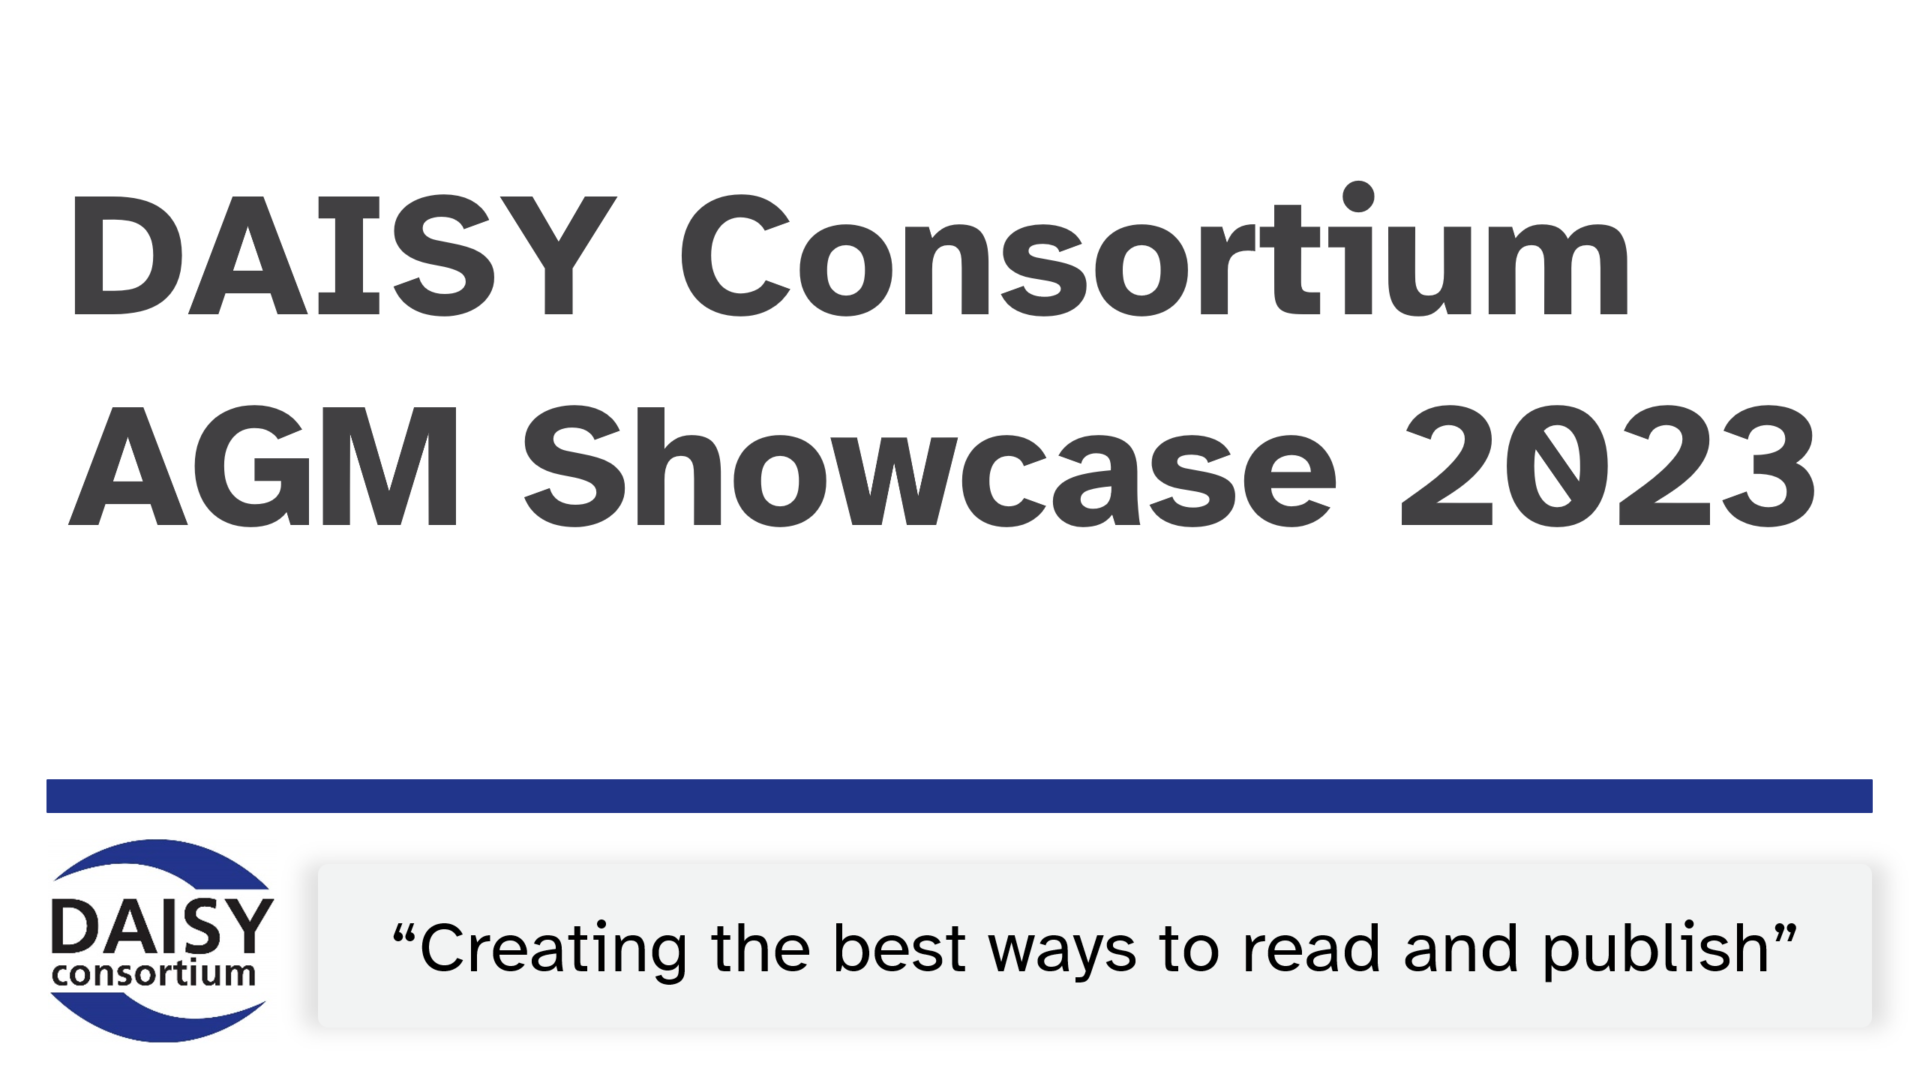 DAISY Consortium AGM Showcase 2023 title slide